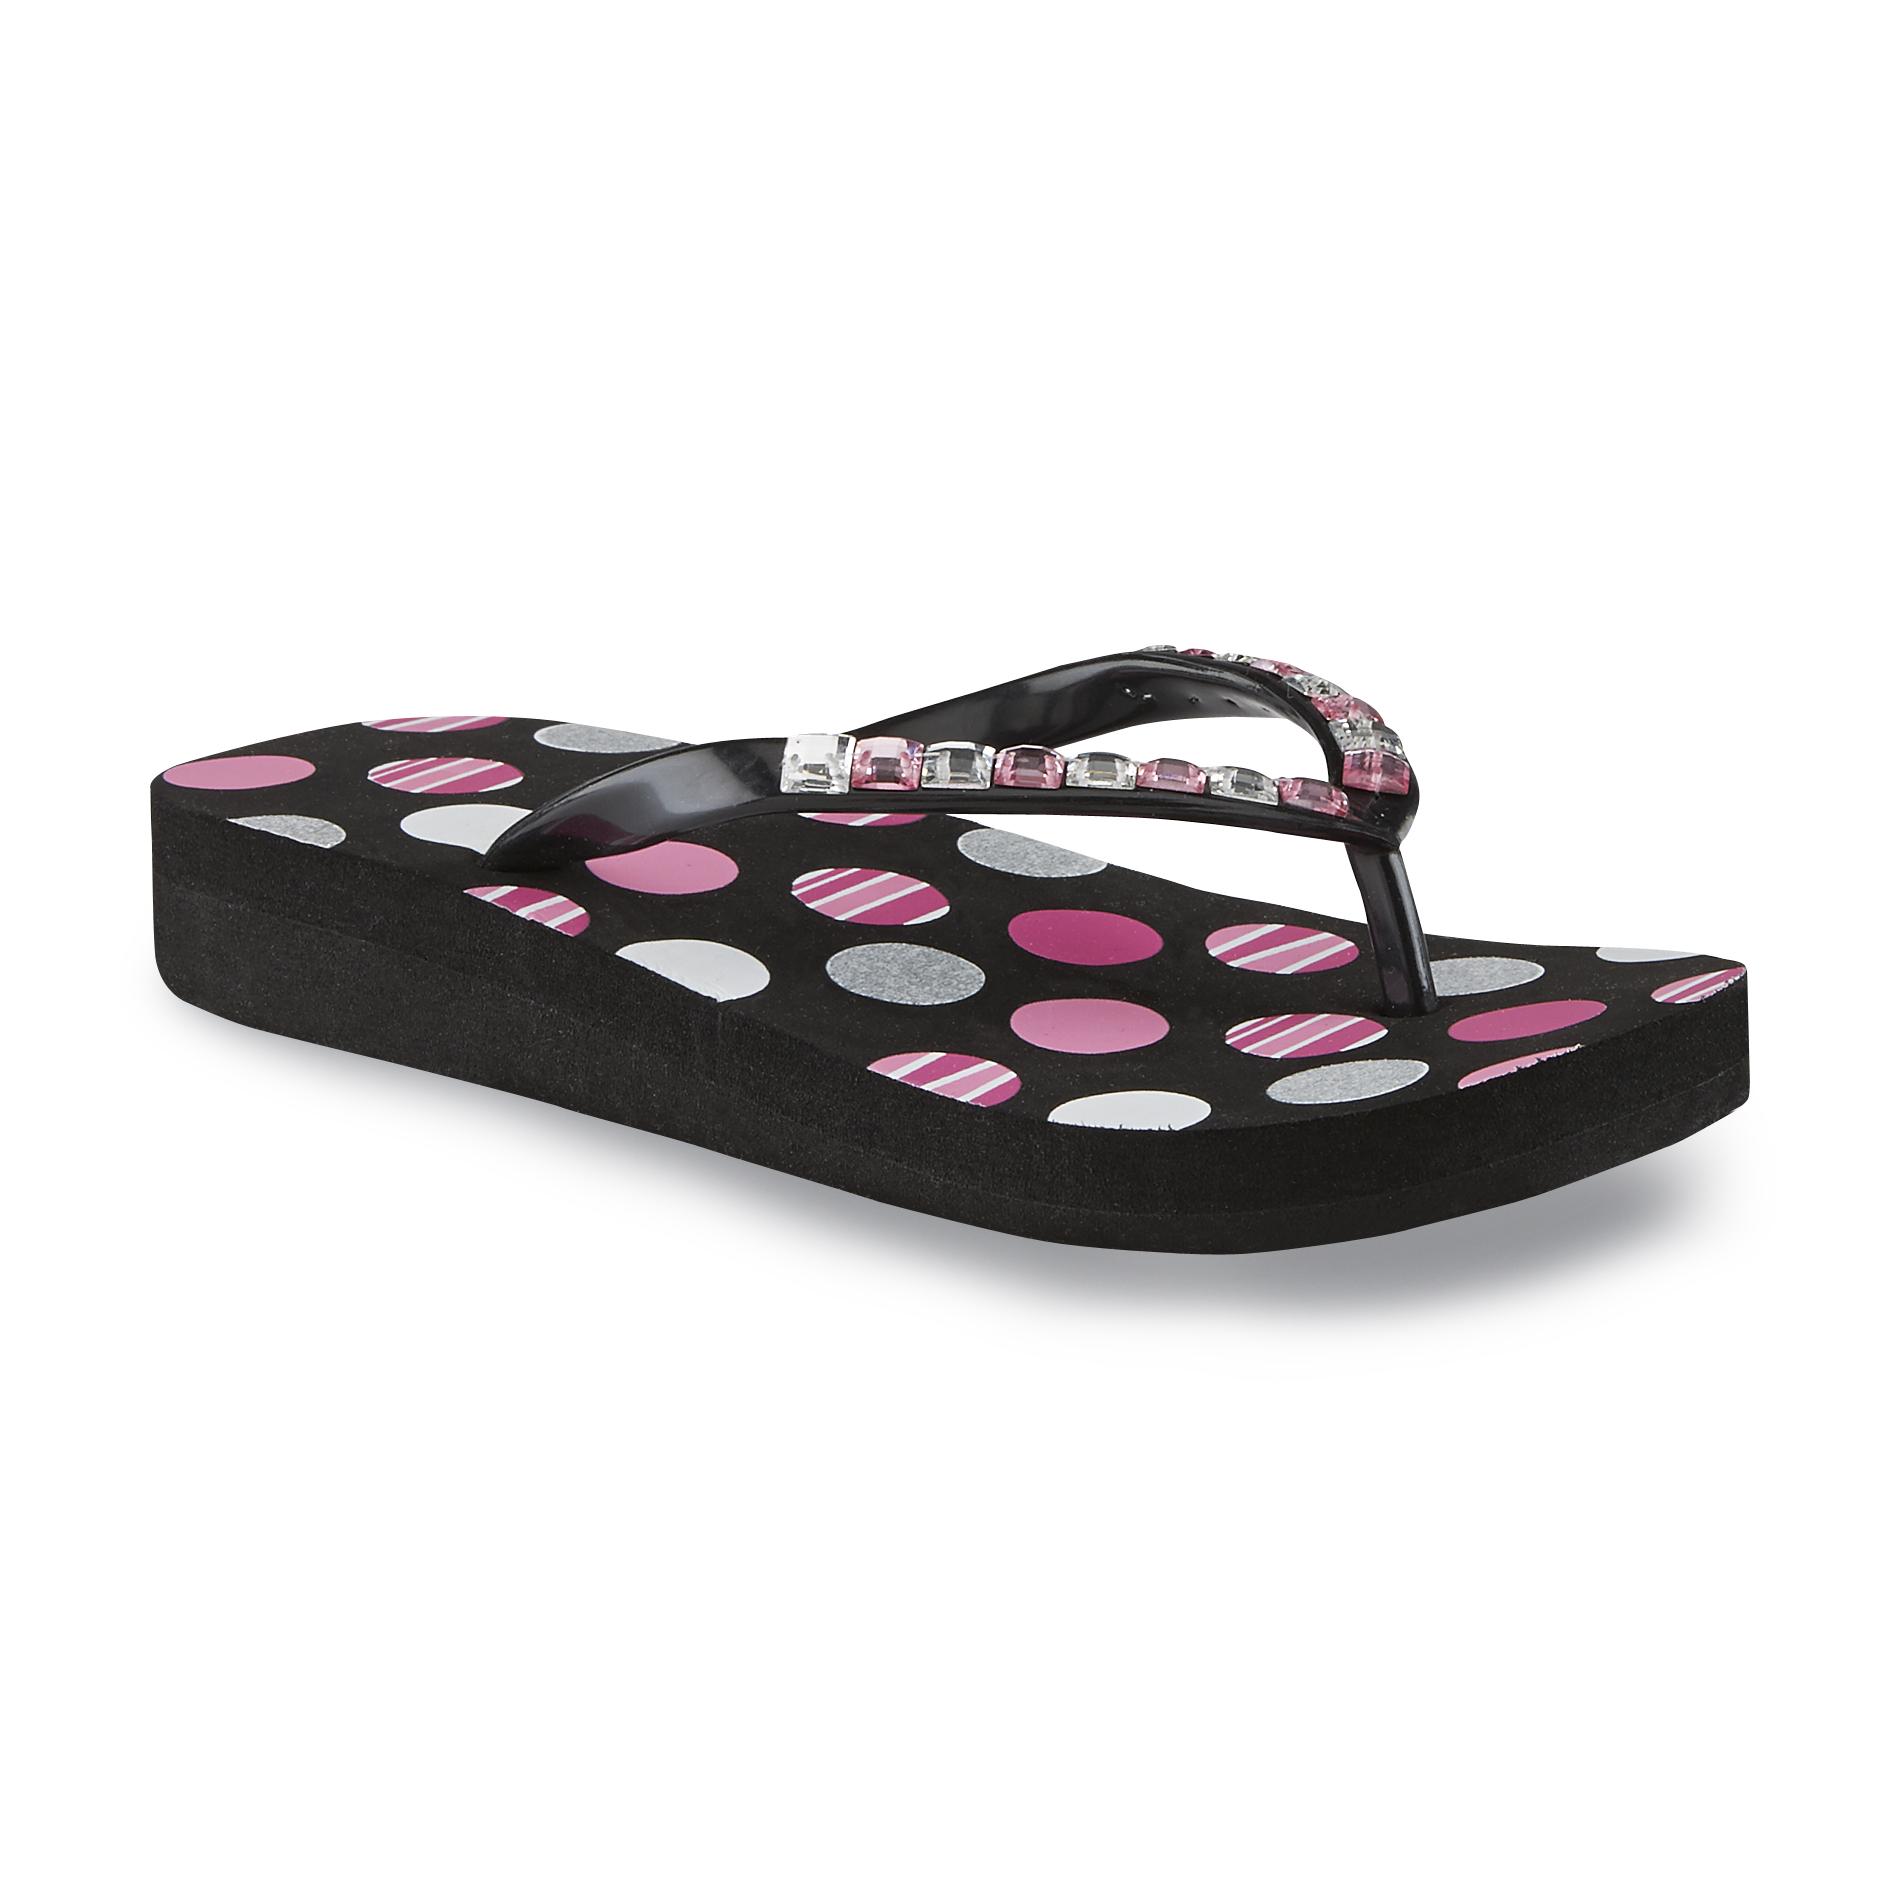 Island Club Girl's Des Jewel Black/Pink/Polka Dot Flip-Flop Sandal